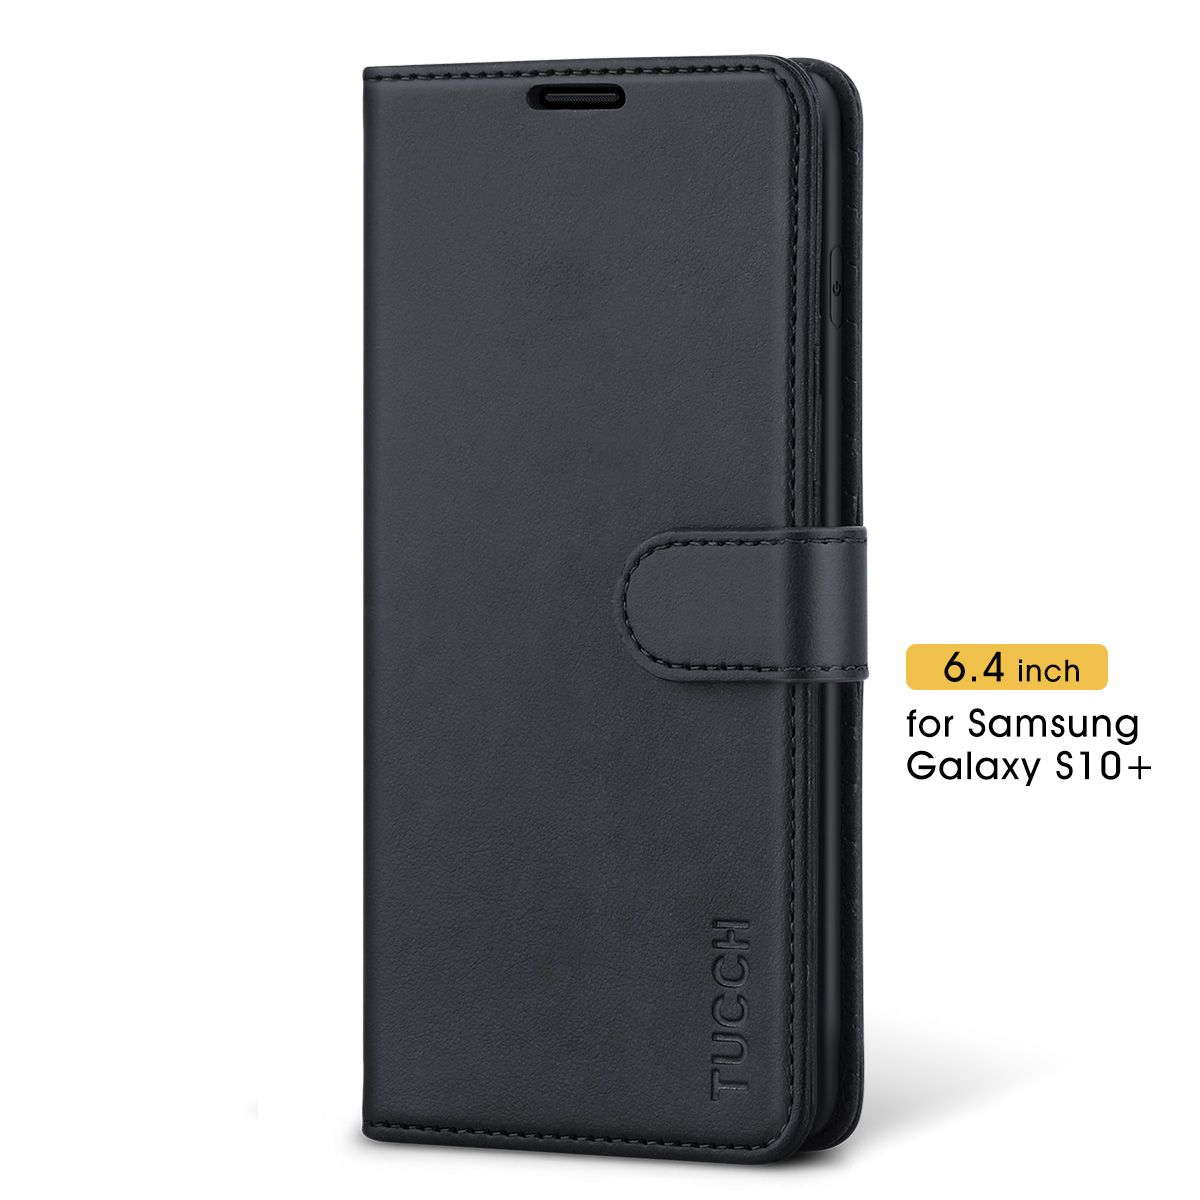 Black Wallet Case for Samsung Galaxy S10 Plus Leather Cover Compatible with Samsung Galaxy S10 Plus